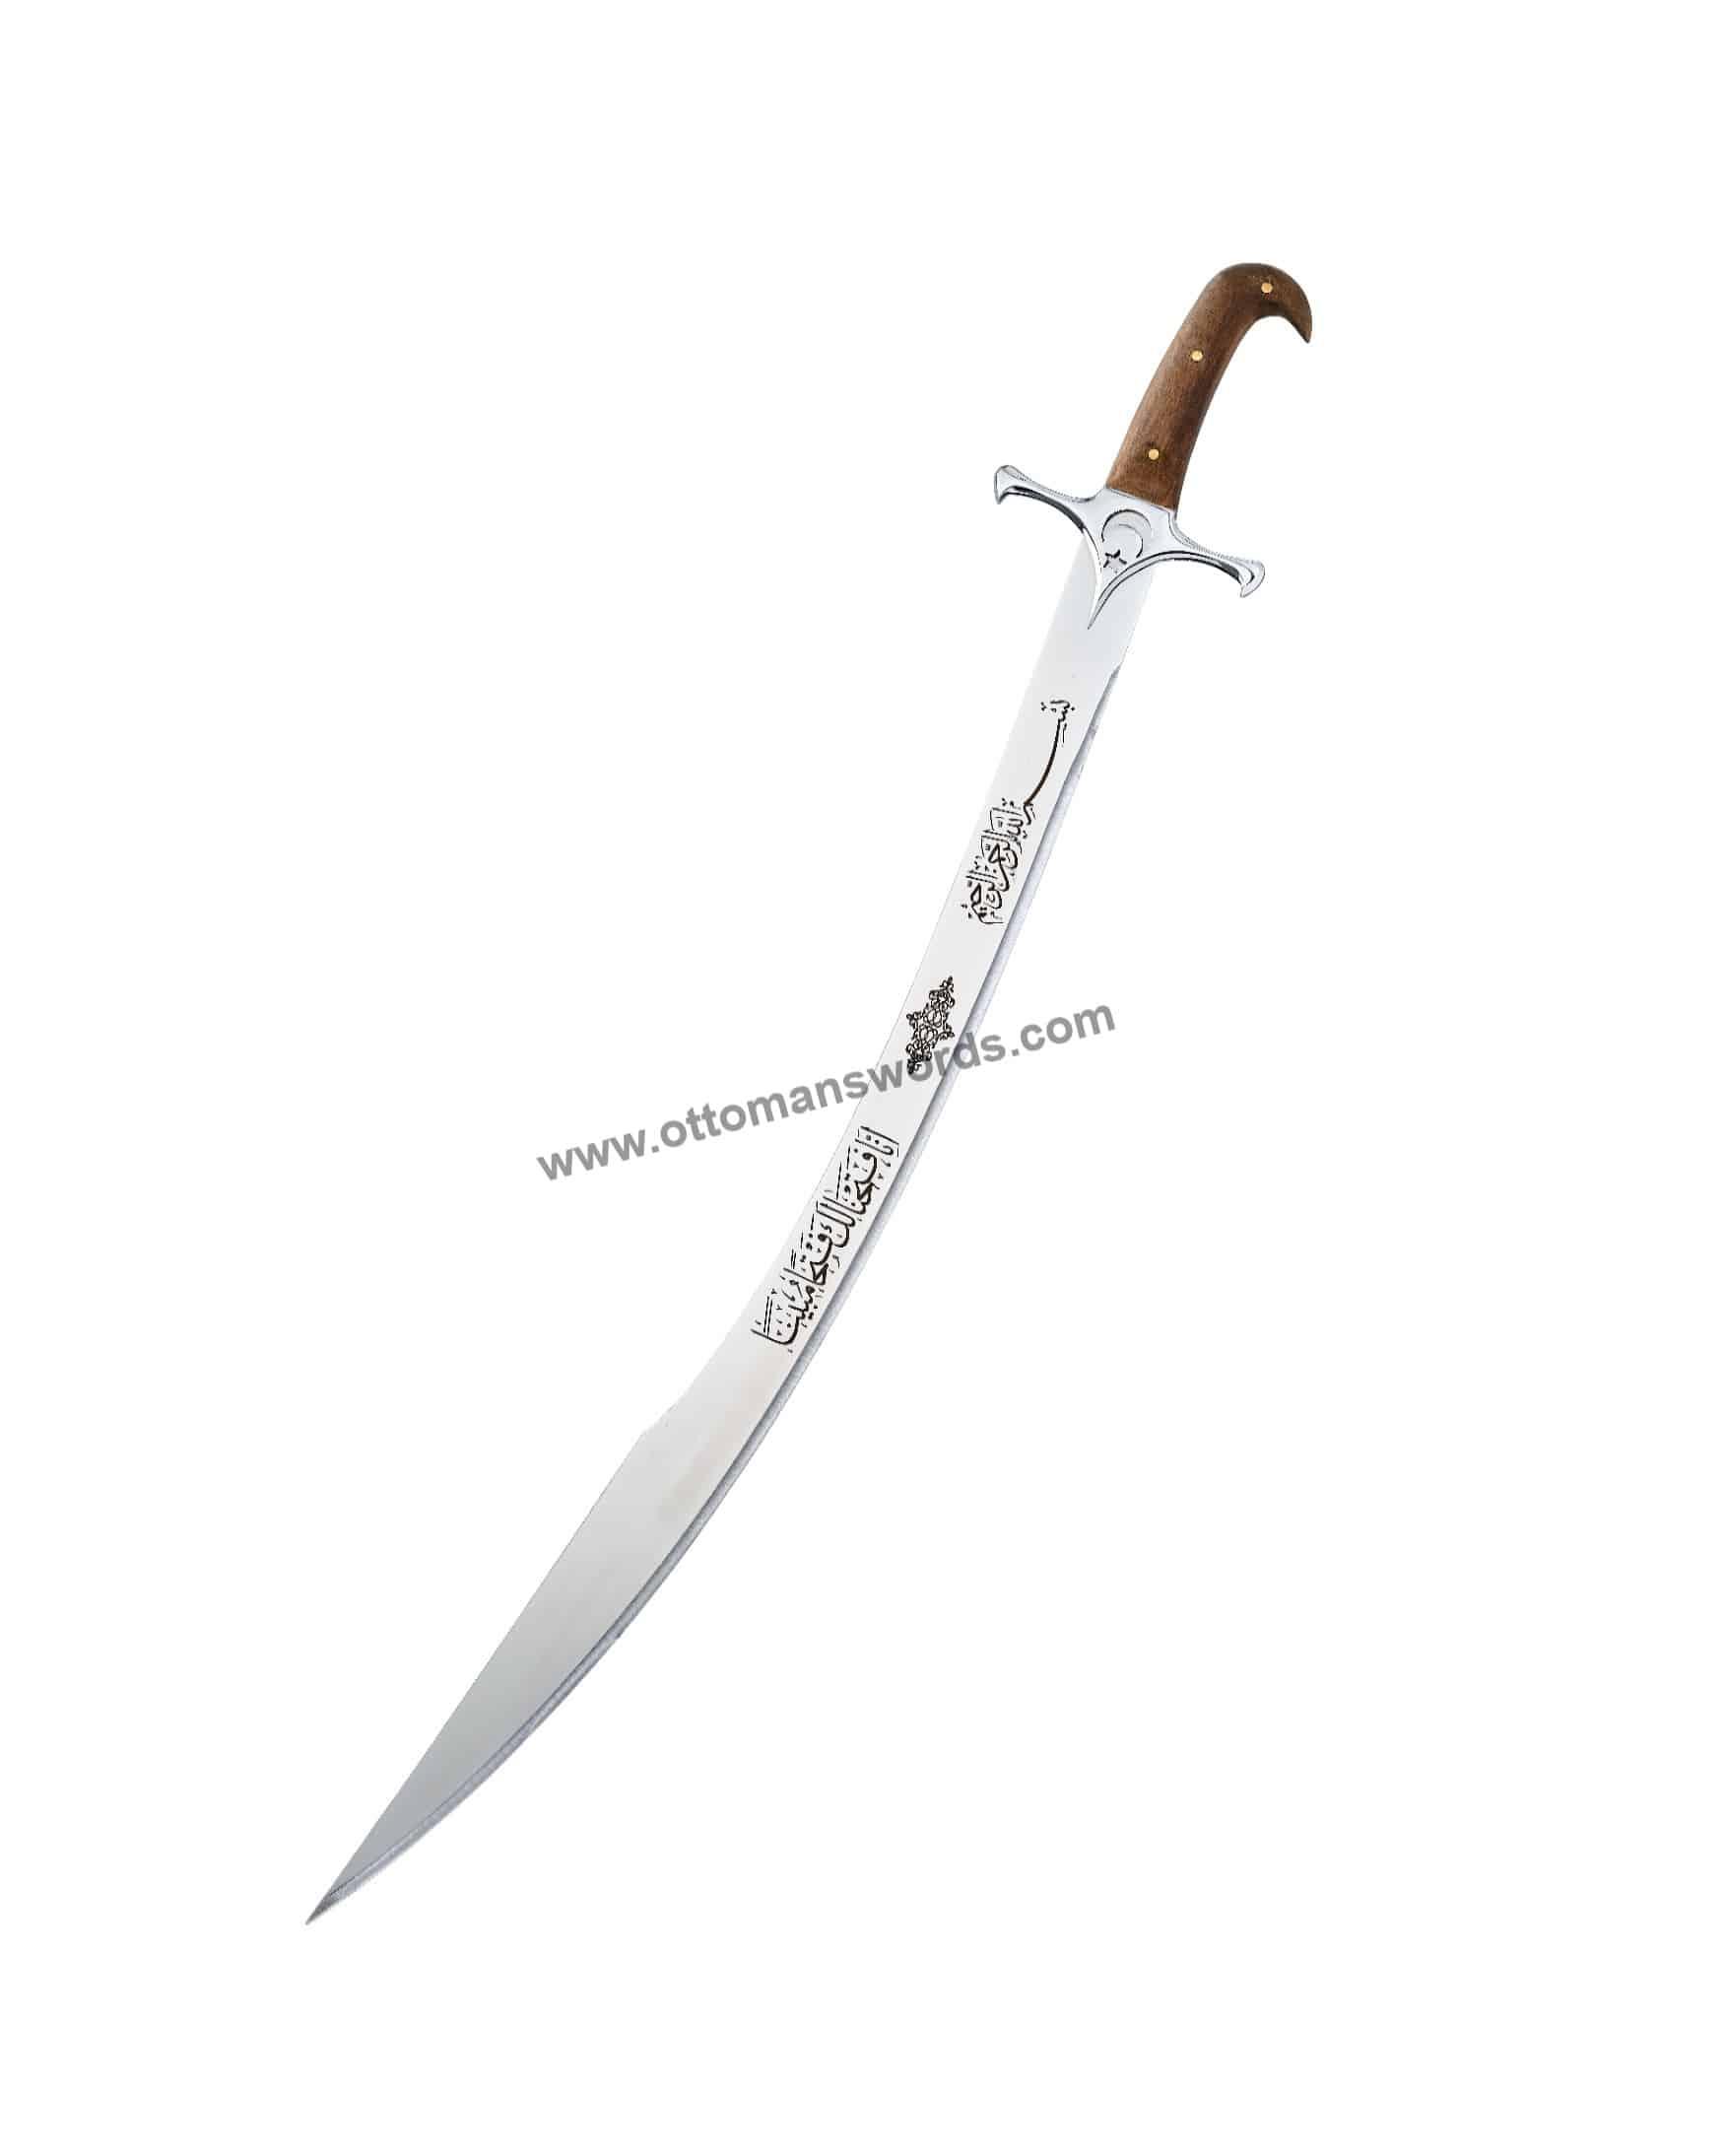 shamshir sword for sale (1)